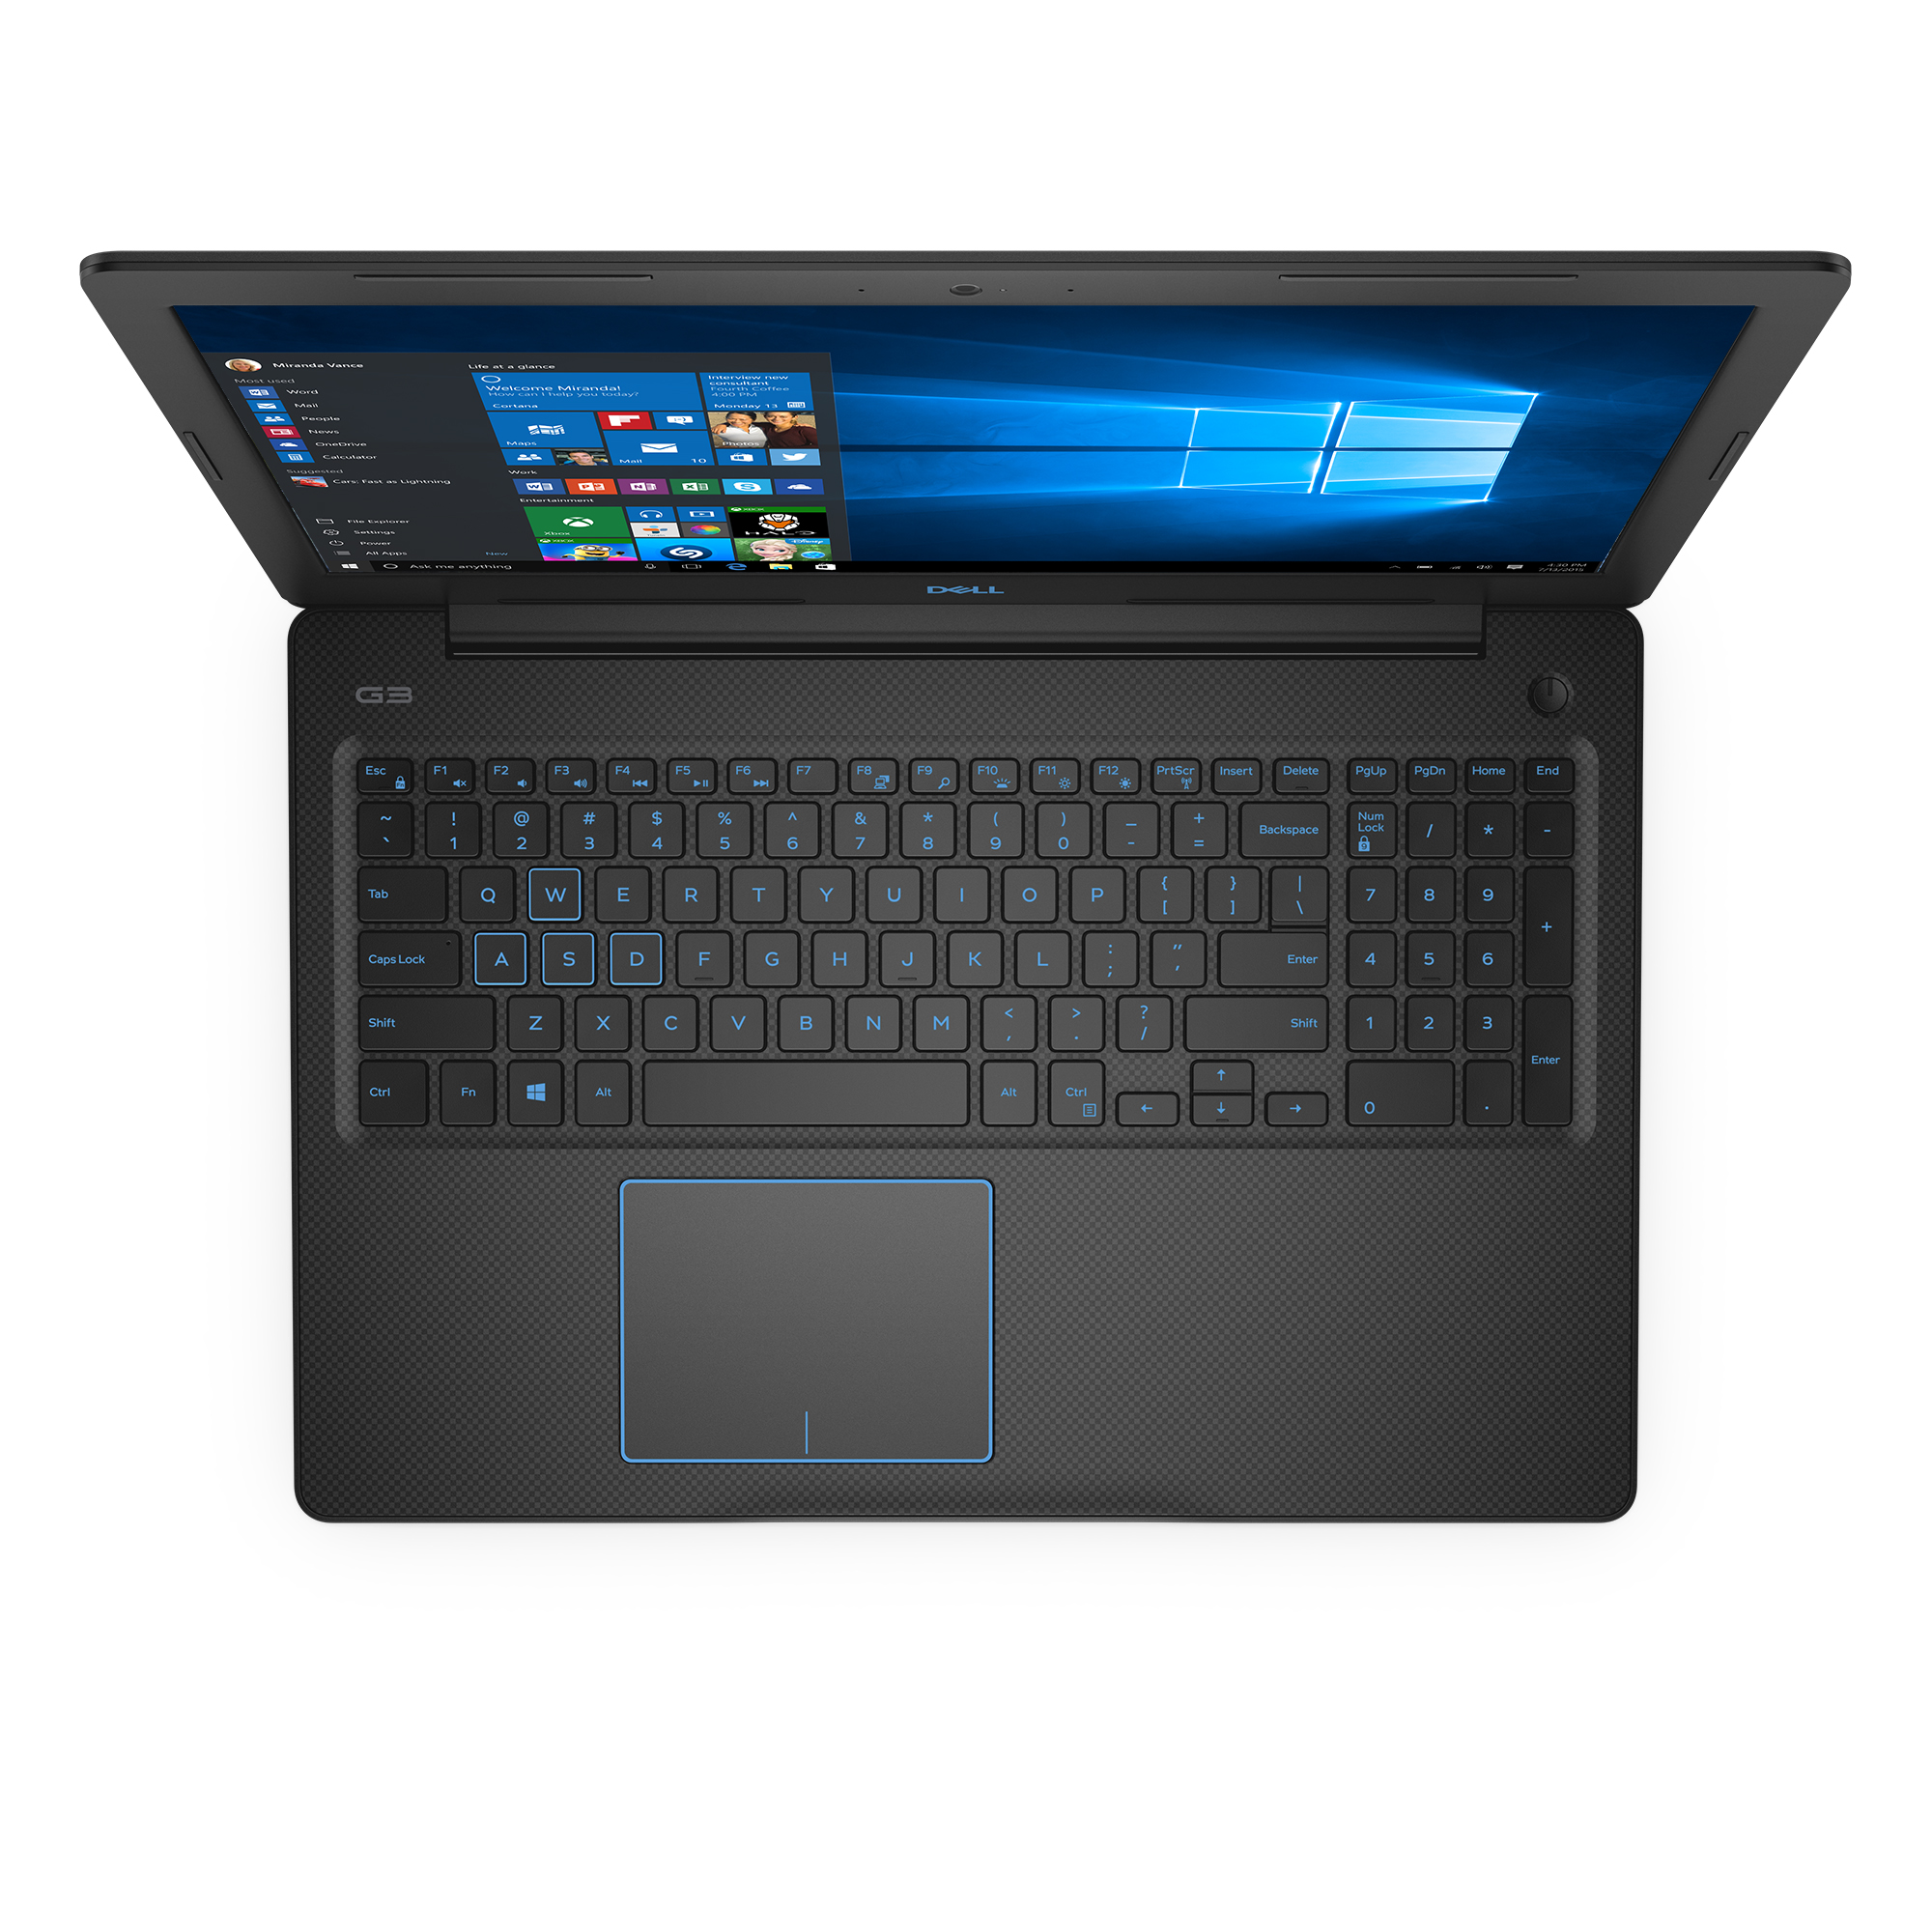 Dell G3 Gaming Laptop 15.6" Full HD, Intel Core i5-8300H, NVIDIA GeForce GTX 1050 4GB, 1TB HDD + 16GB Intel Optane Storage, 8GB RAM, Windows 10 - Black - G3579-5245BLK - image 5 of 6